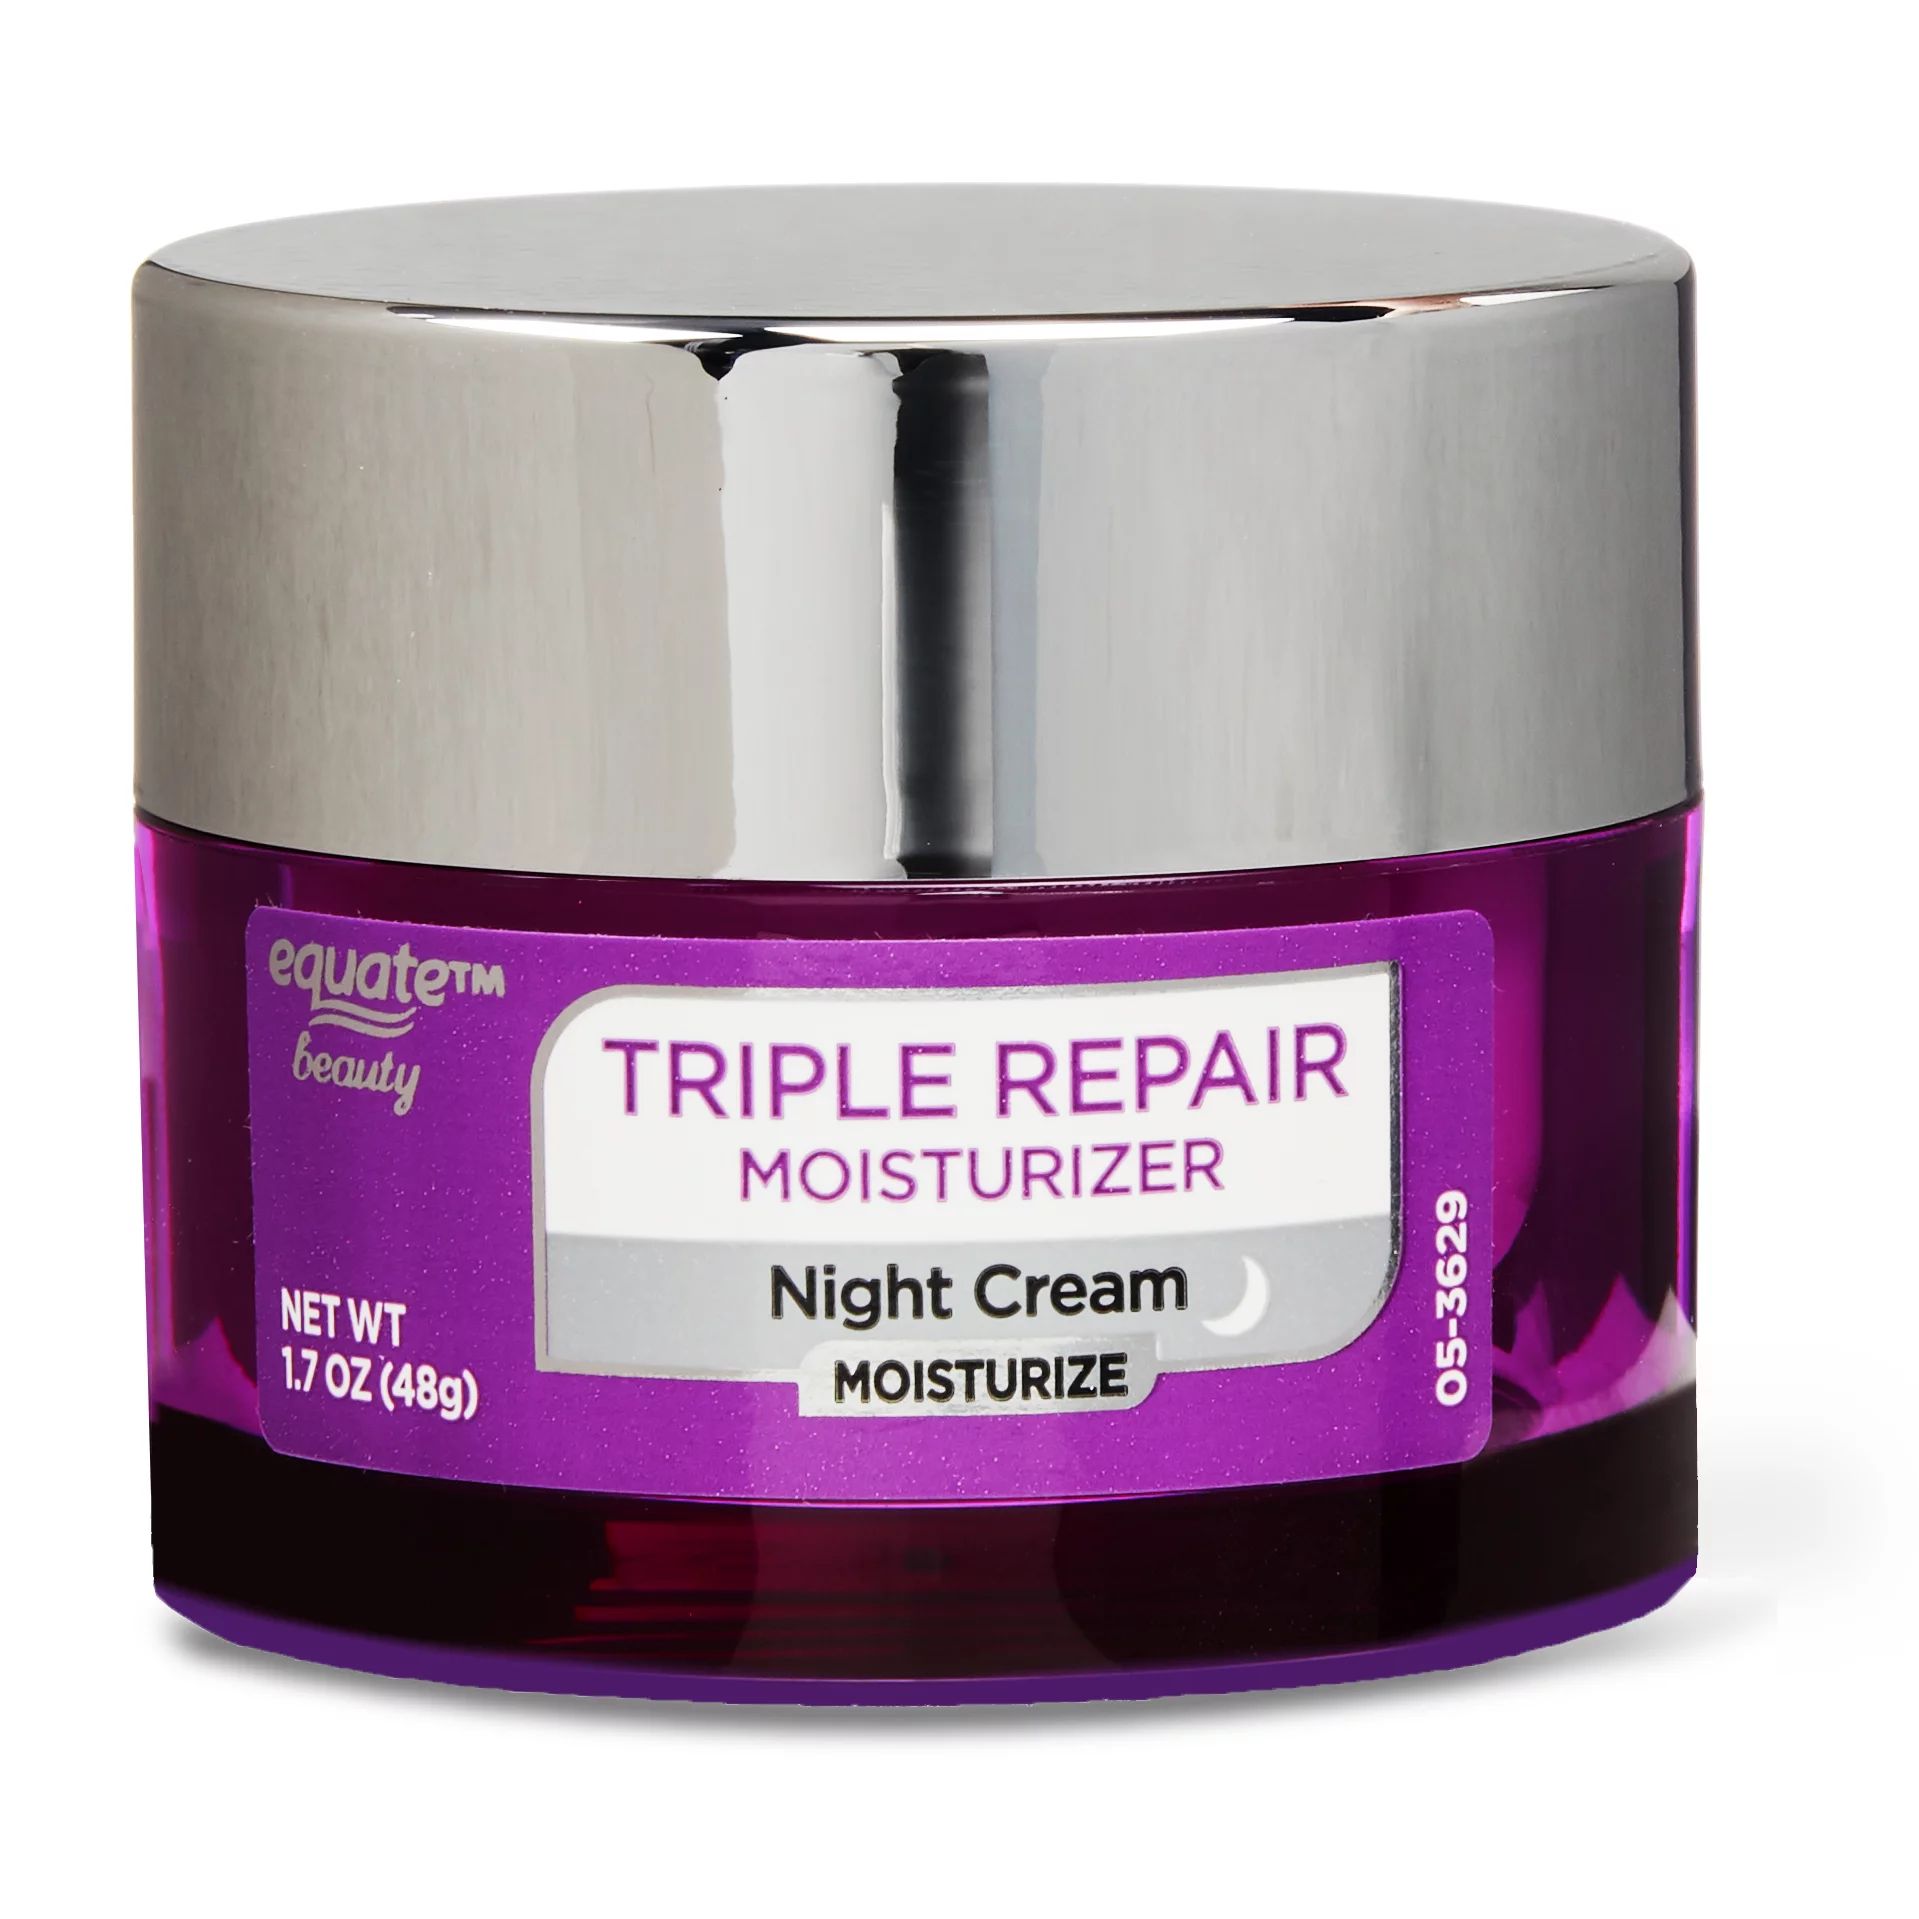 Equate Beauty Triple Repair Moisturizer Night Cream, Compare to Neutrogena, 1.7 oz. | Walmart (US)